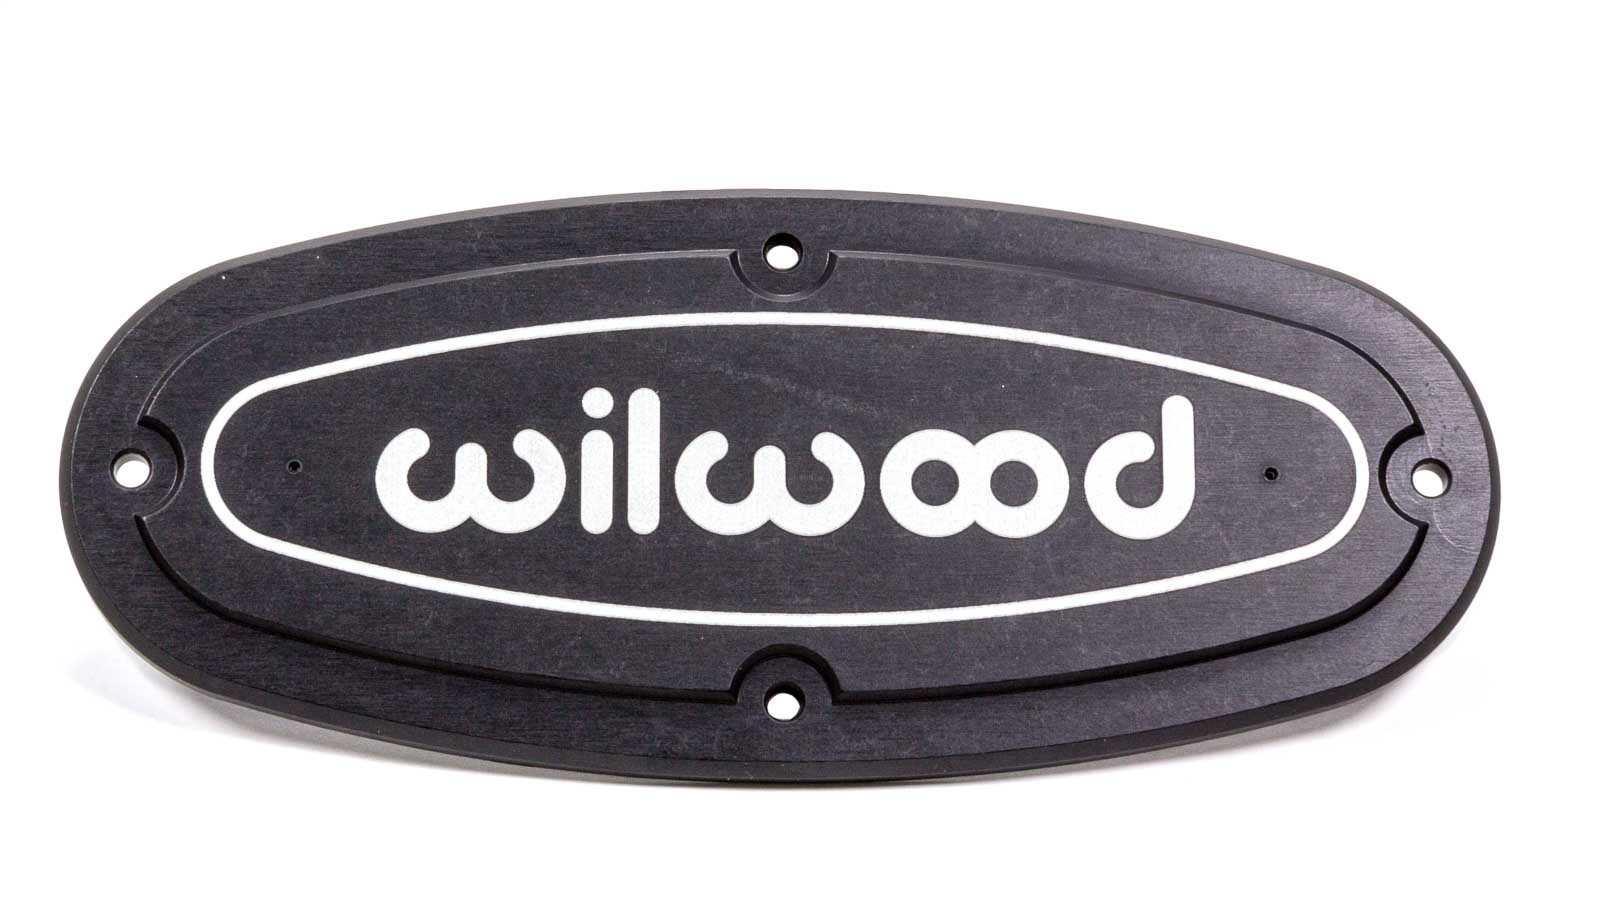 Wilwood 330-8573 Master Cylinder Cap, Screw-On, Aluminum, Black Paint, Wilwood Tandem Master Cylinders, Each